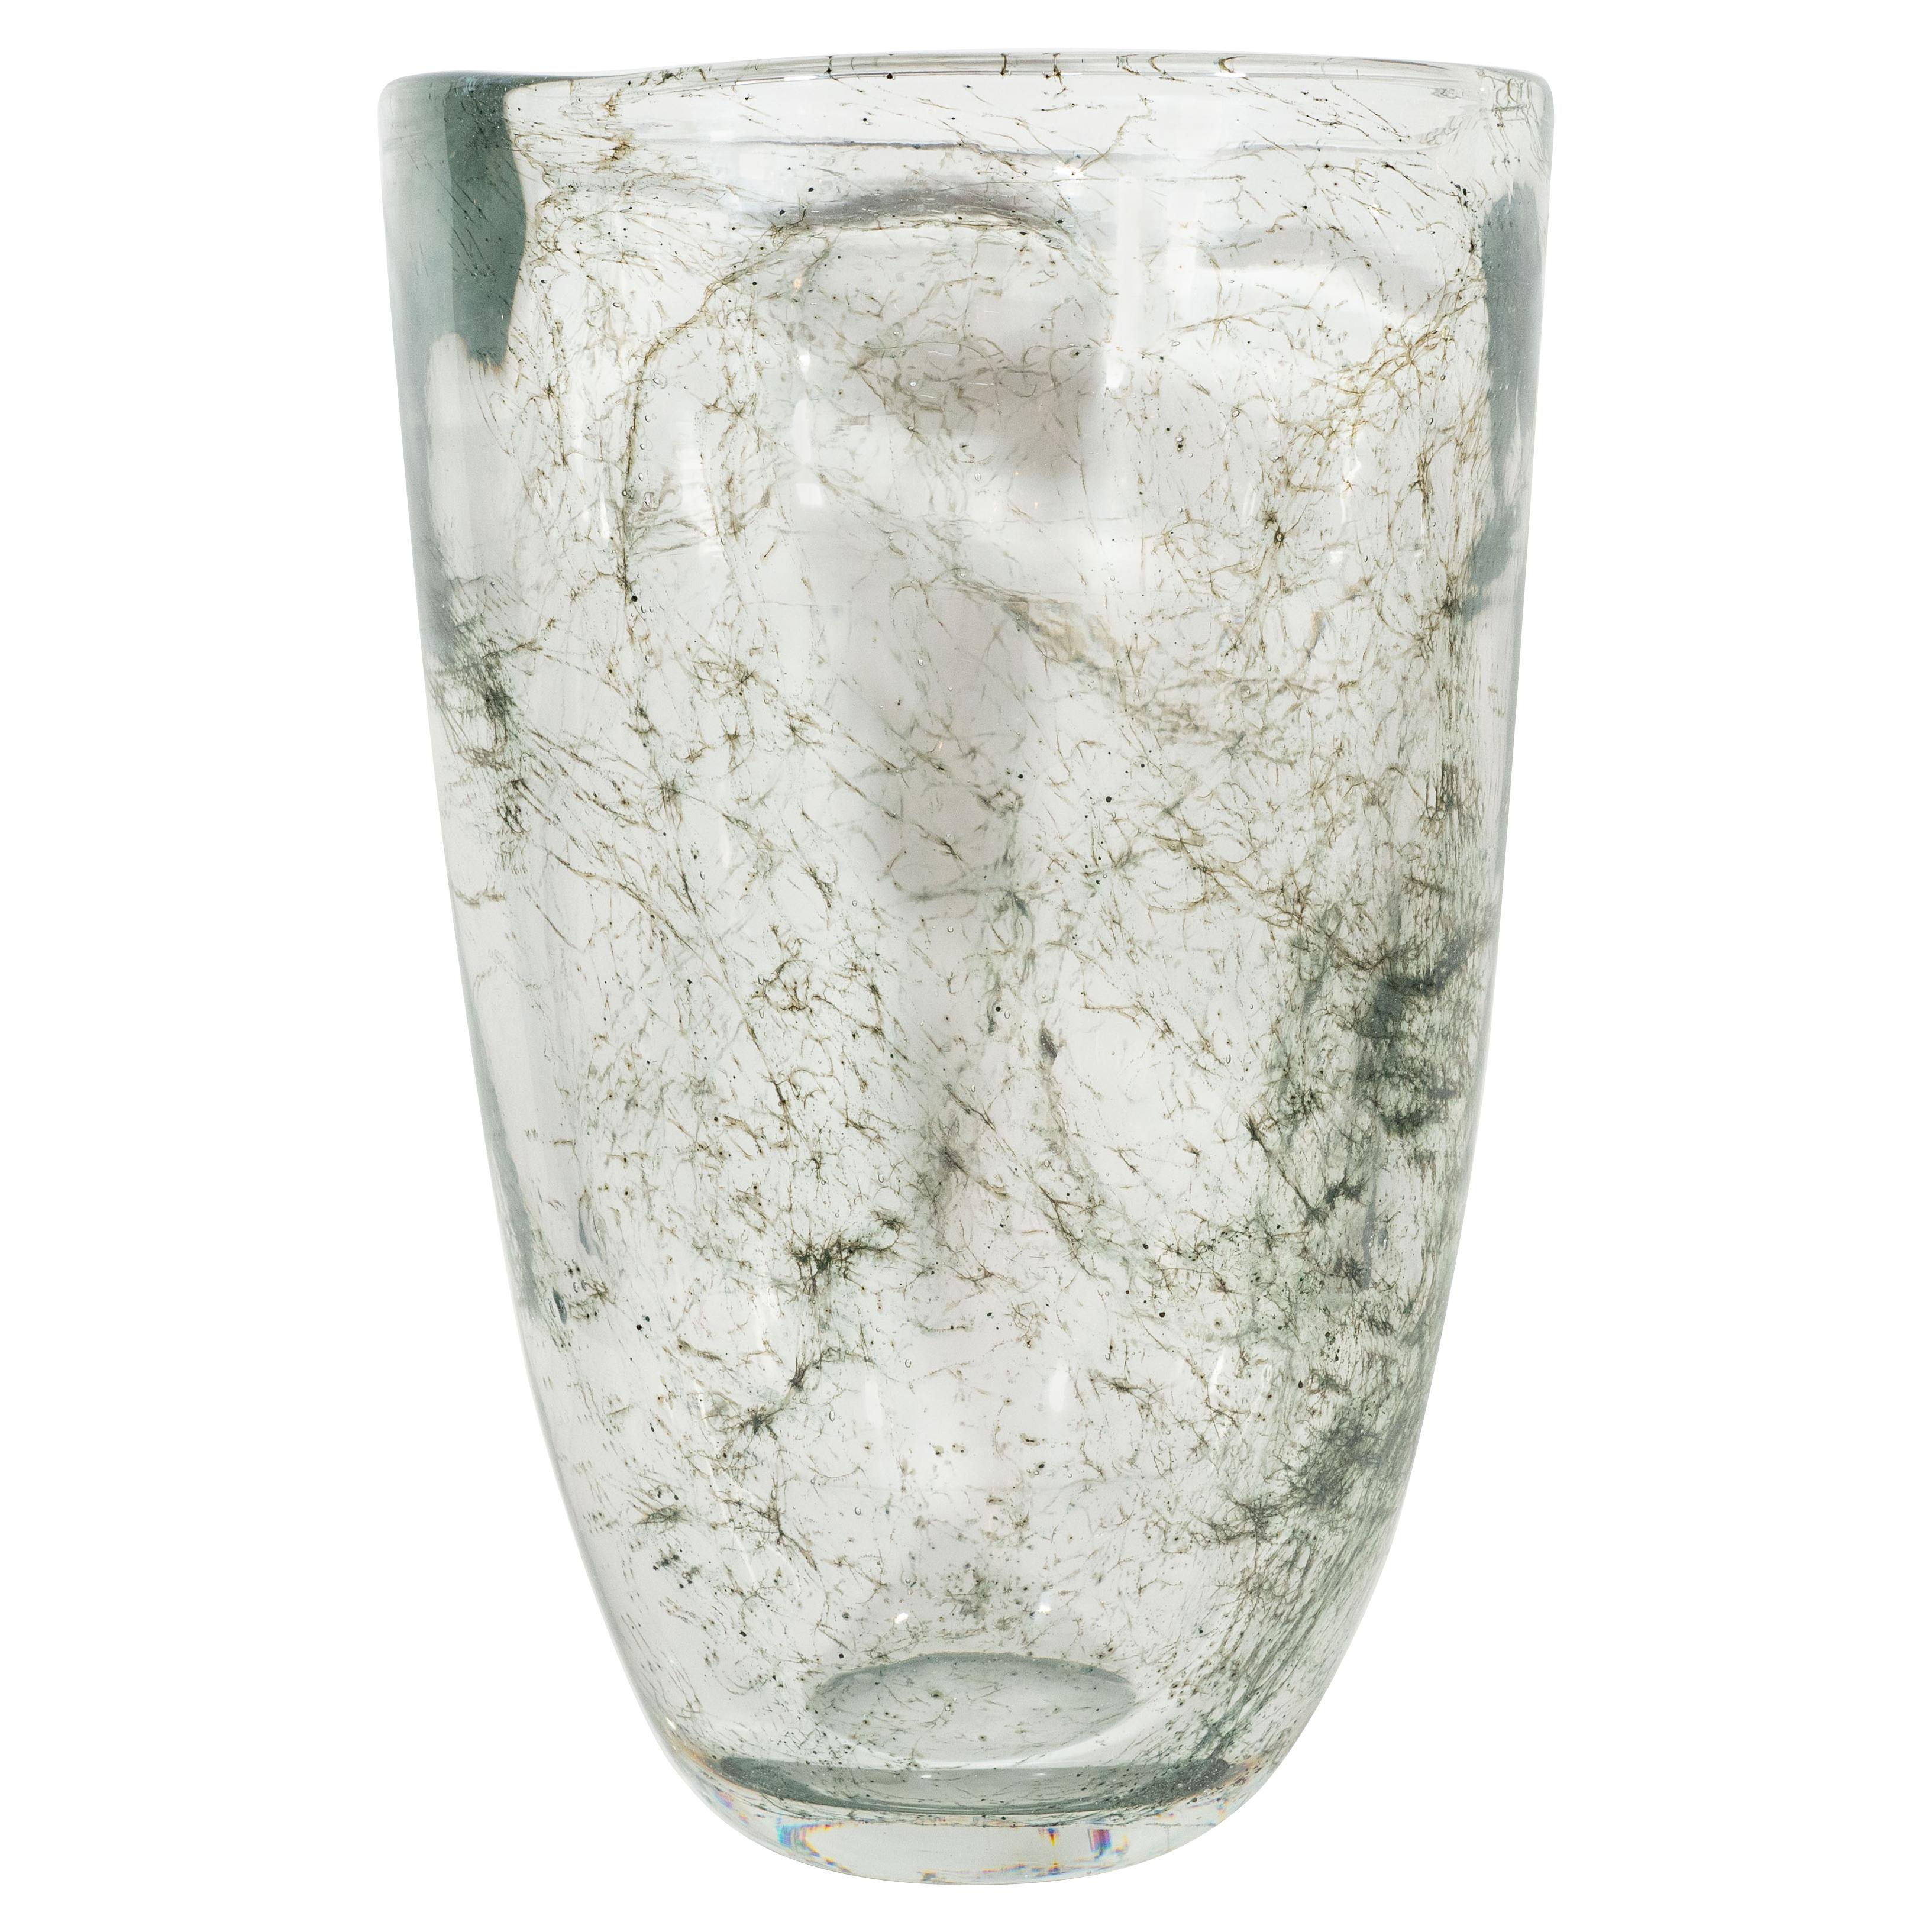 Modernist Handblown Murano Glass Vase with Sage Expressionist Detailing